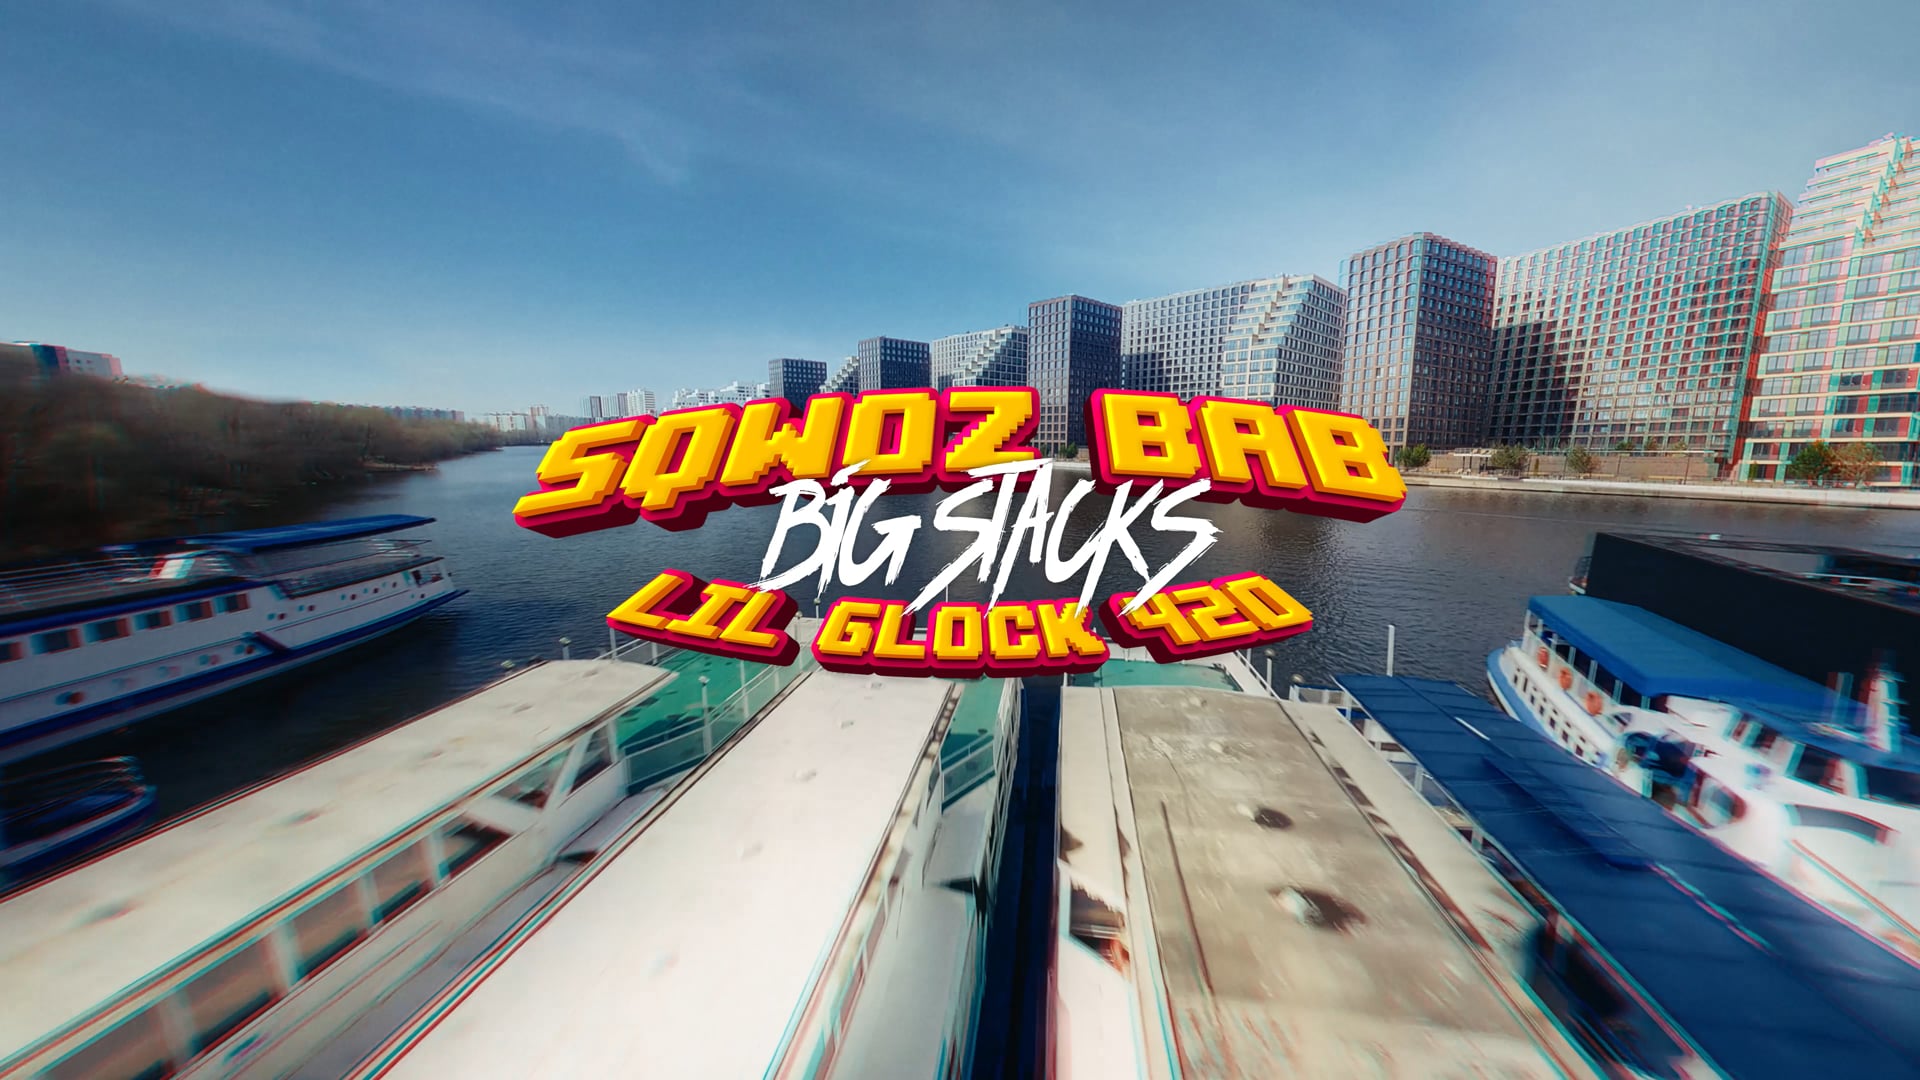 SQWOZ BAB feat. LILGLOCK420 - BIG STACKS